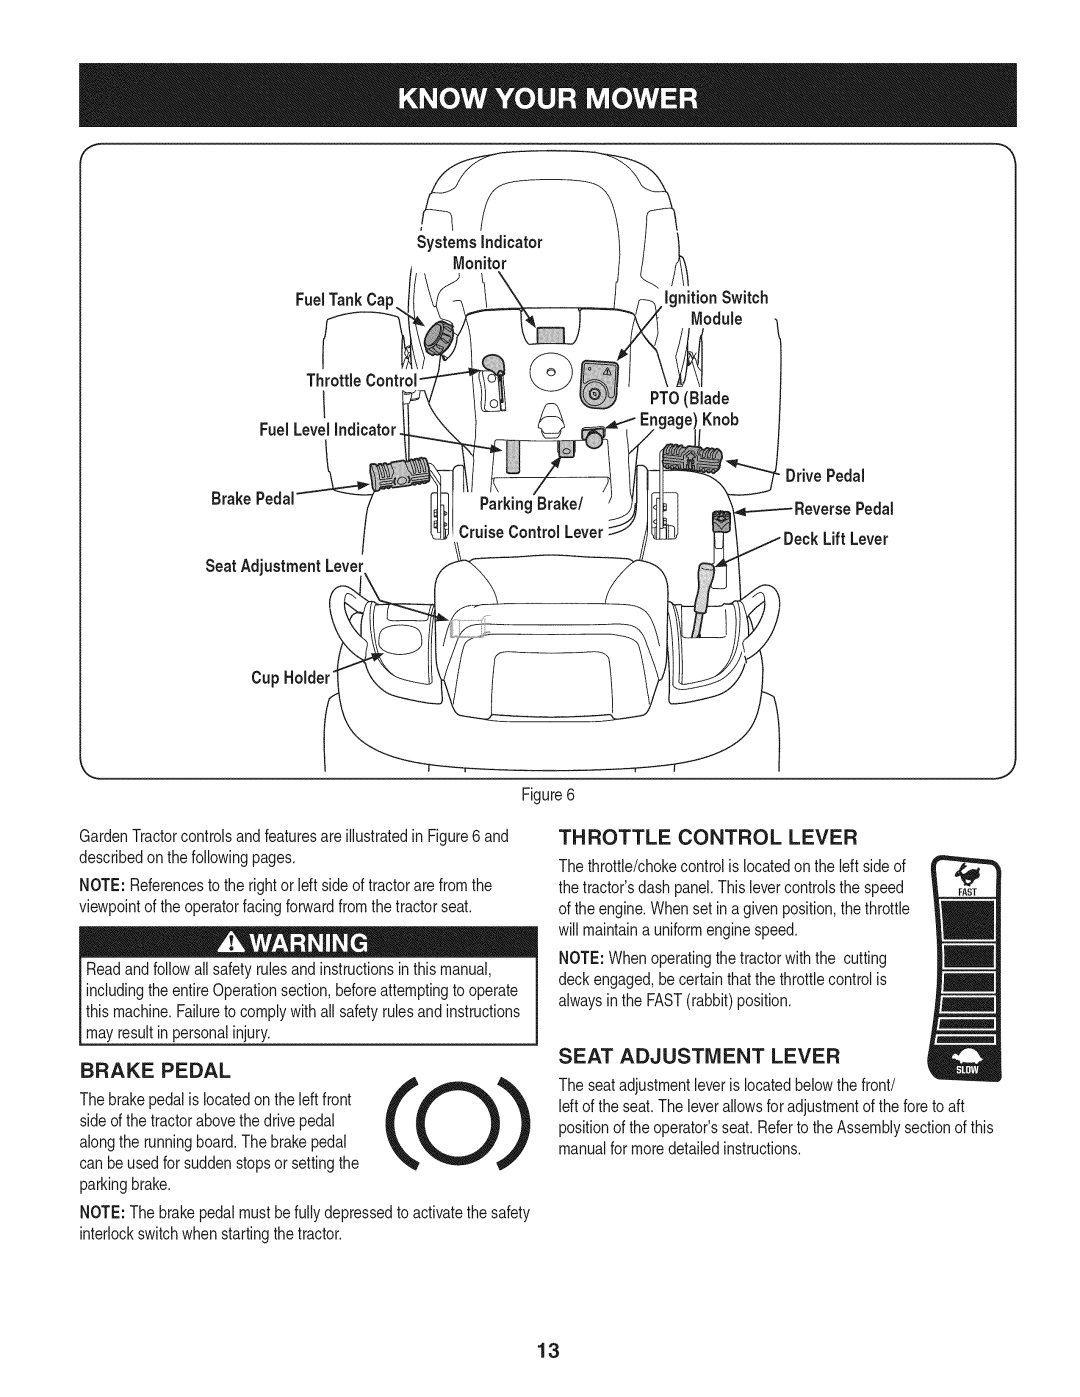 Craftsman 247.28984 Throttle Control Lever, Brake Pedal, Seat Adjustment Lever, Monitor, PTOBlade, DrivePedal, Lift Lever 